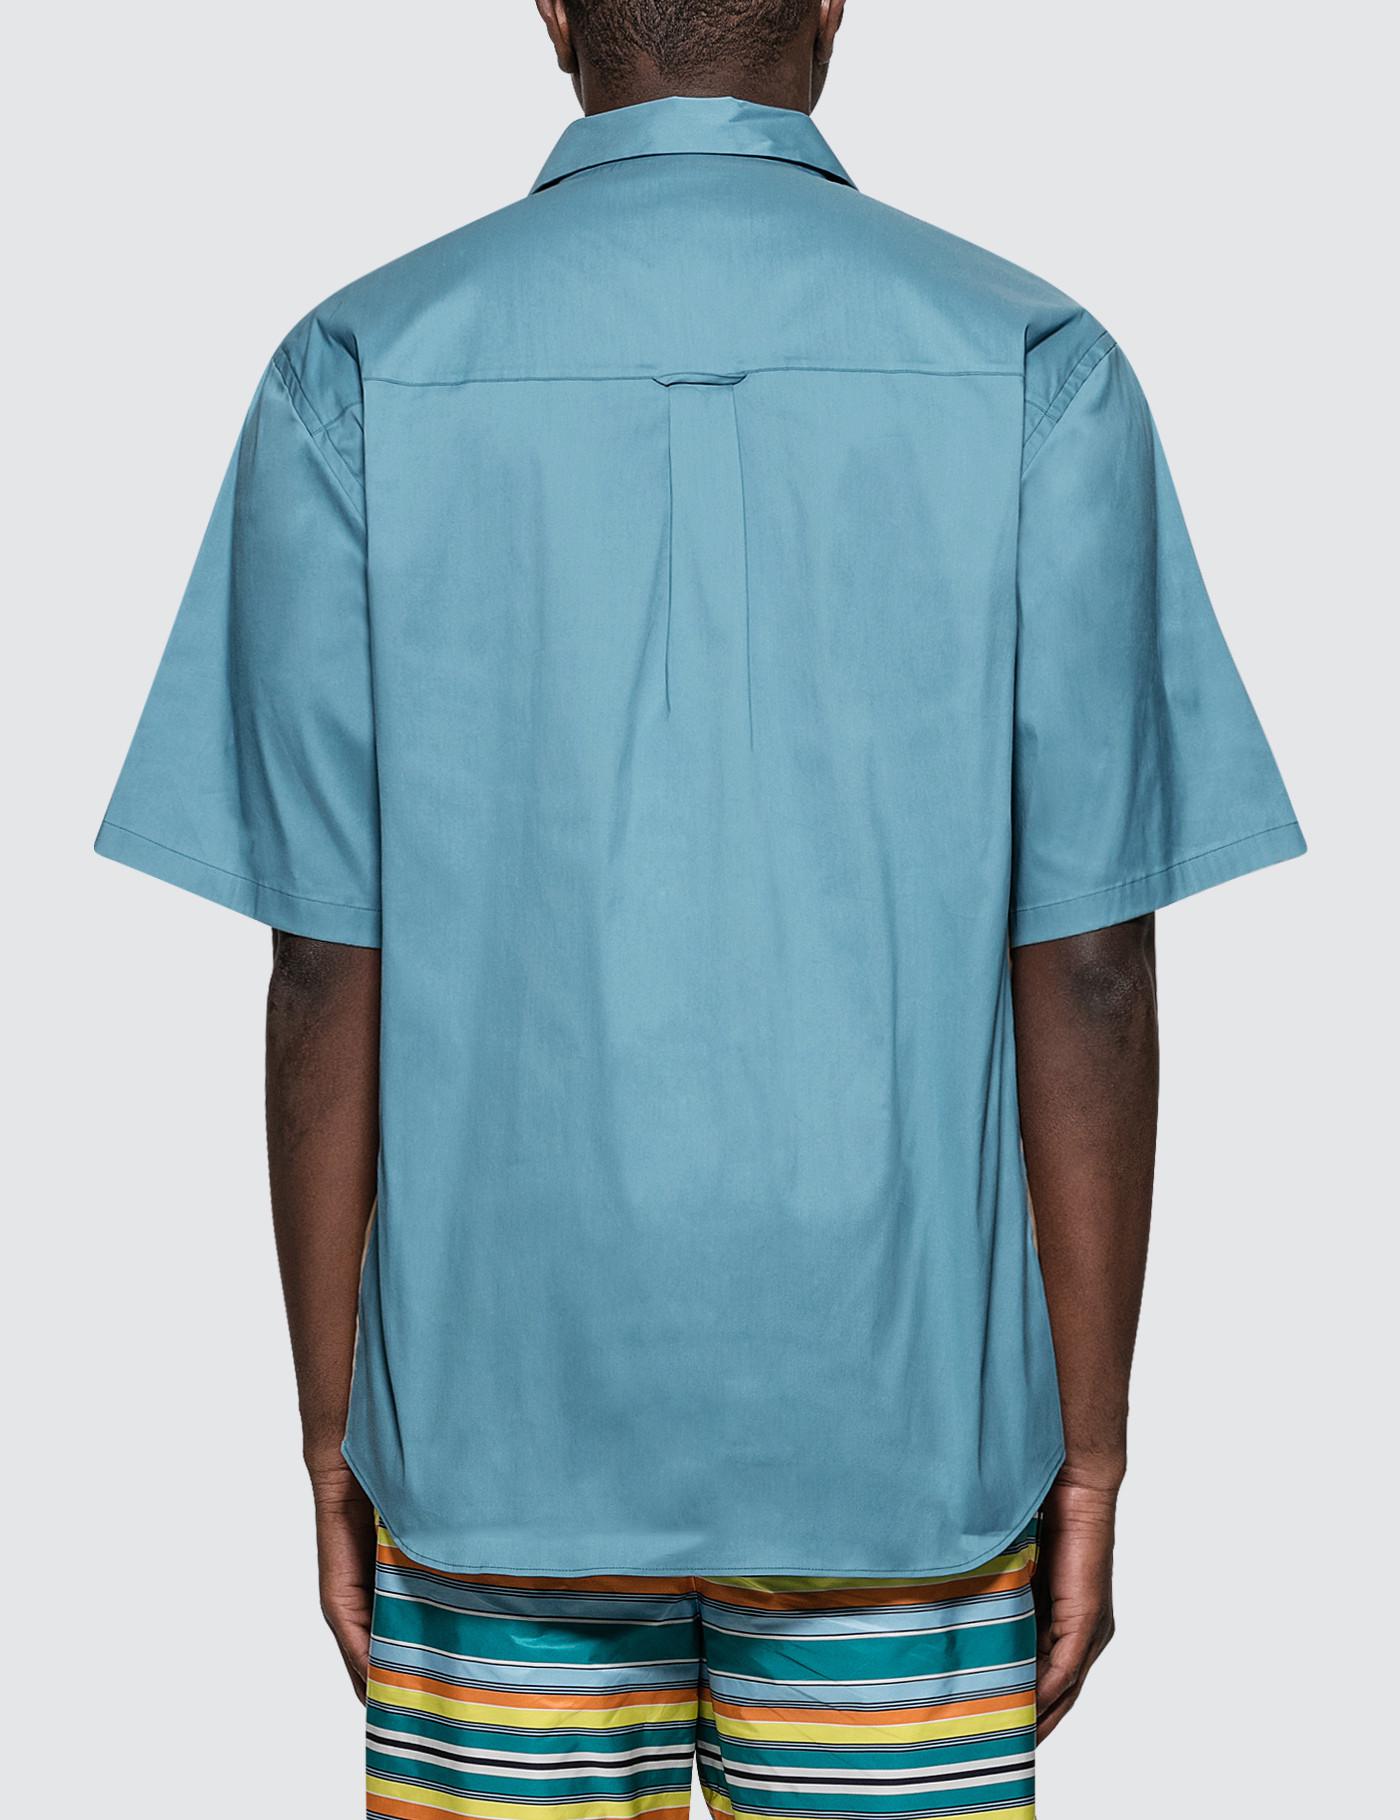 Prada Cotton Oversize Shirt in Blue for Men - Lyst